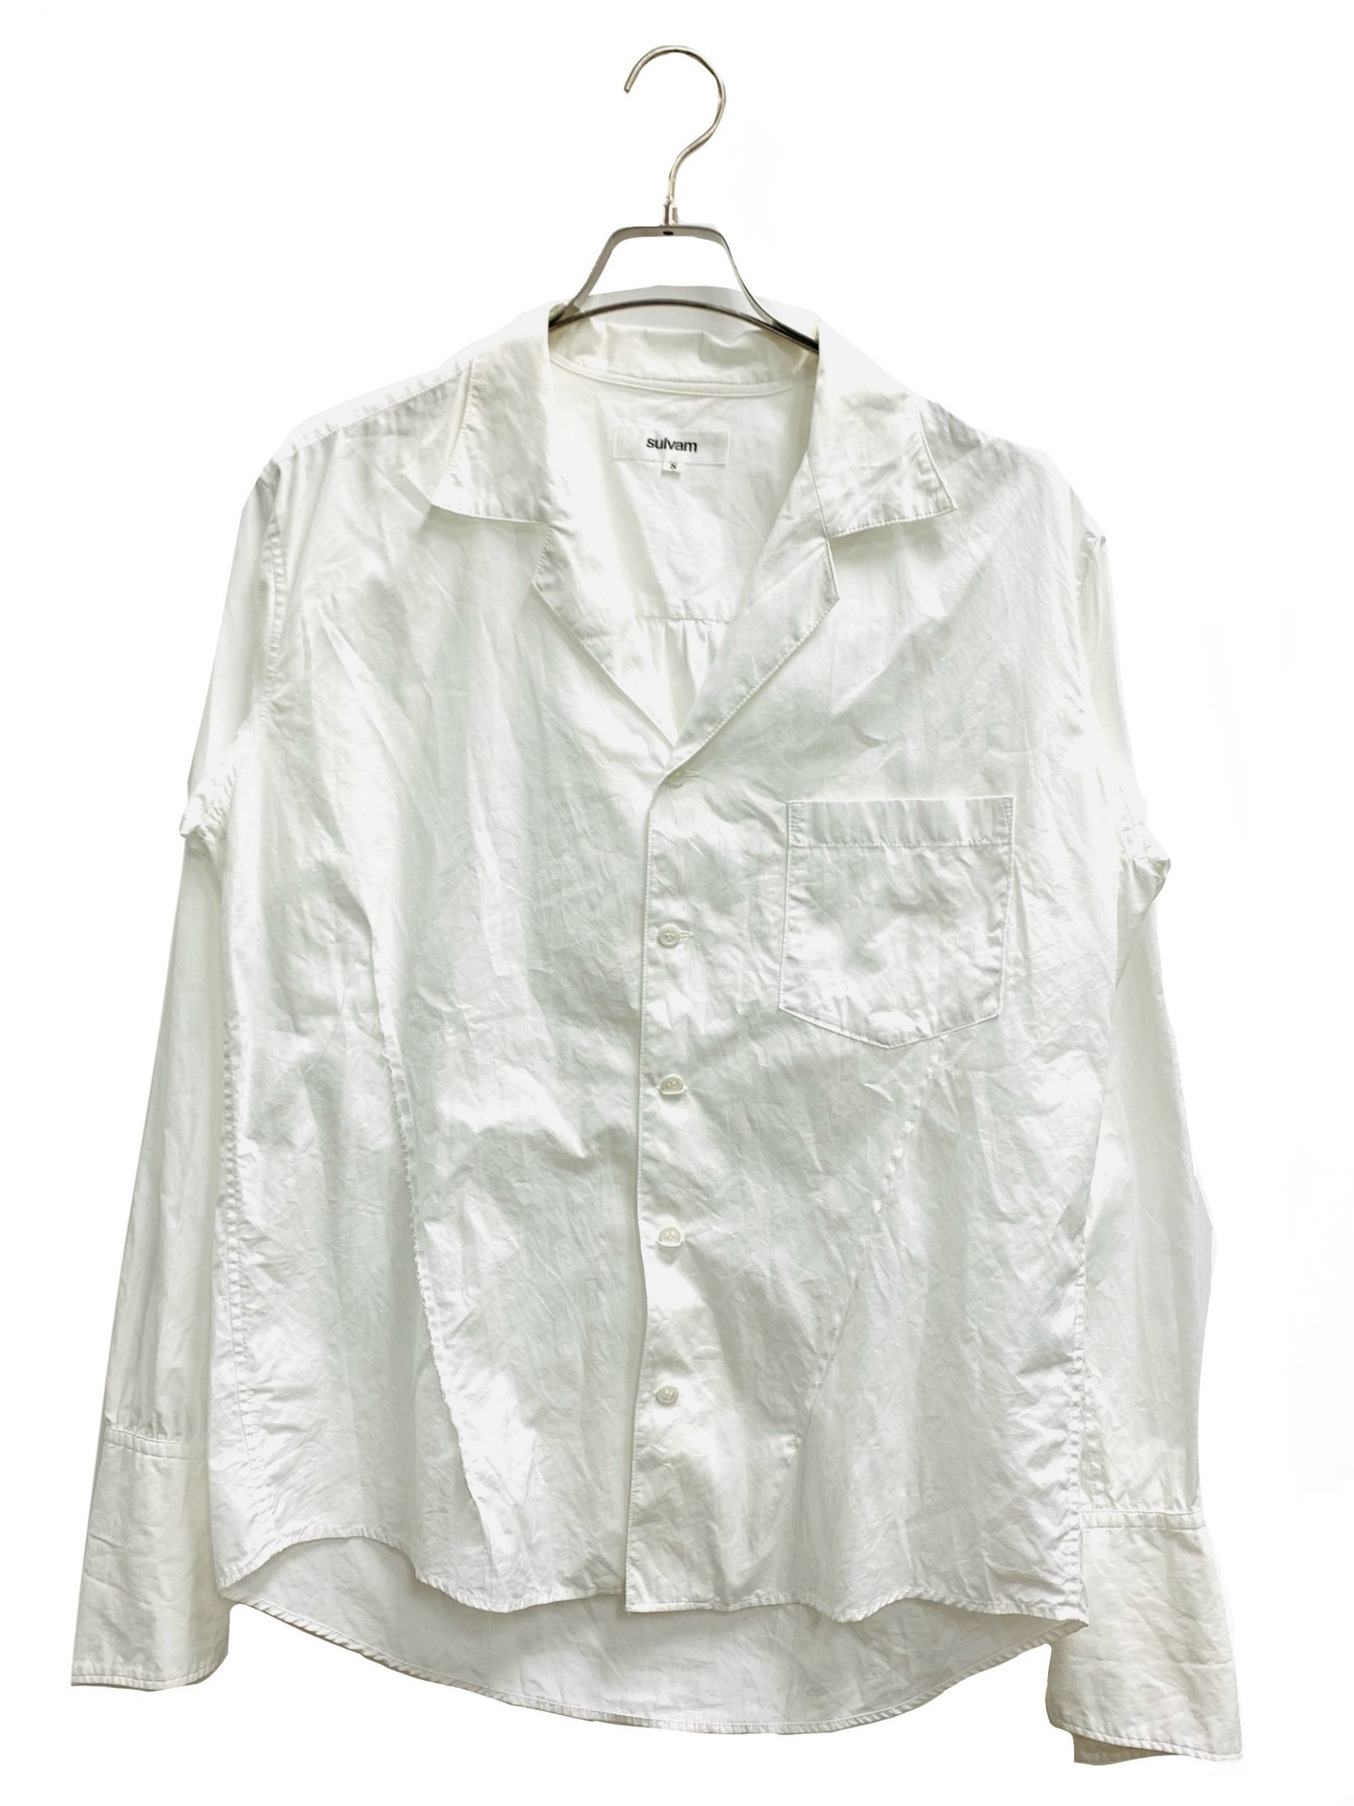 sulvam (サルバム) オープンカラーシャツ ホワイト サイズ:S